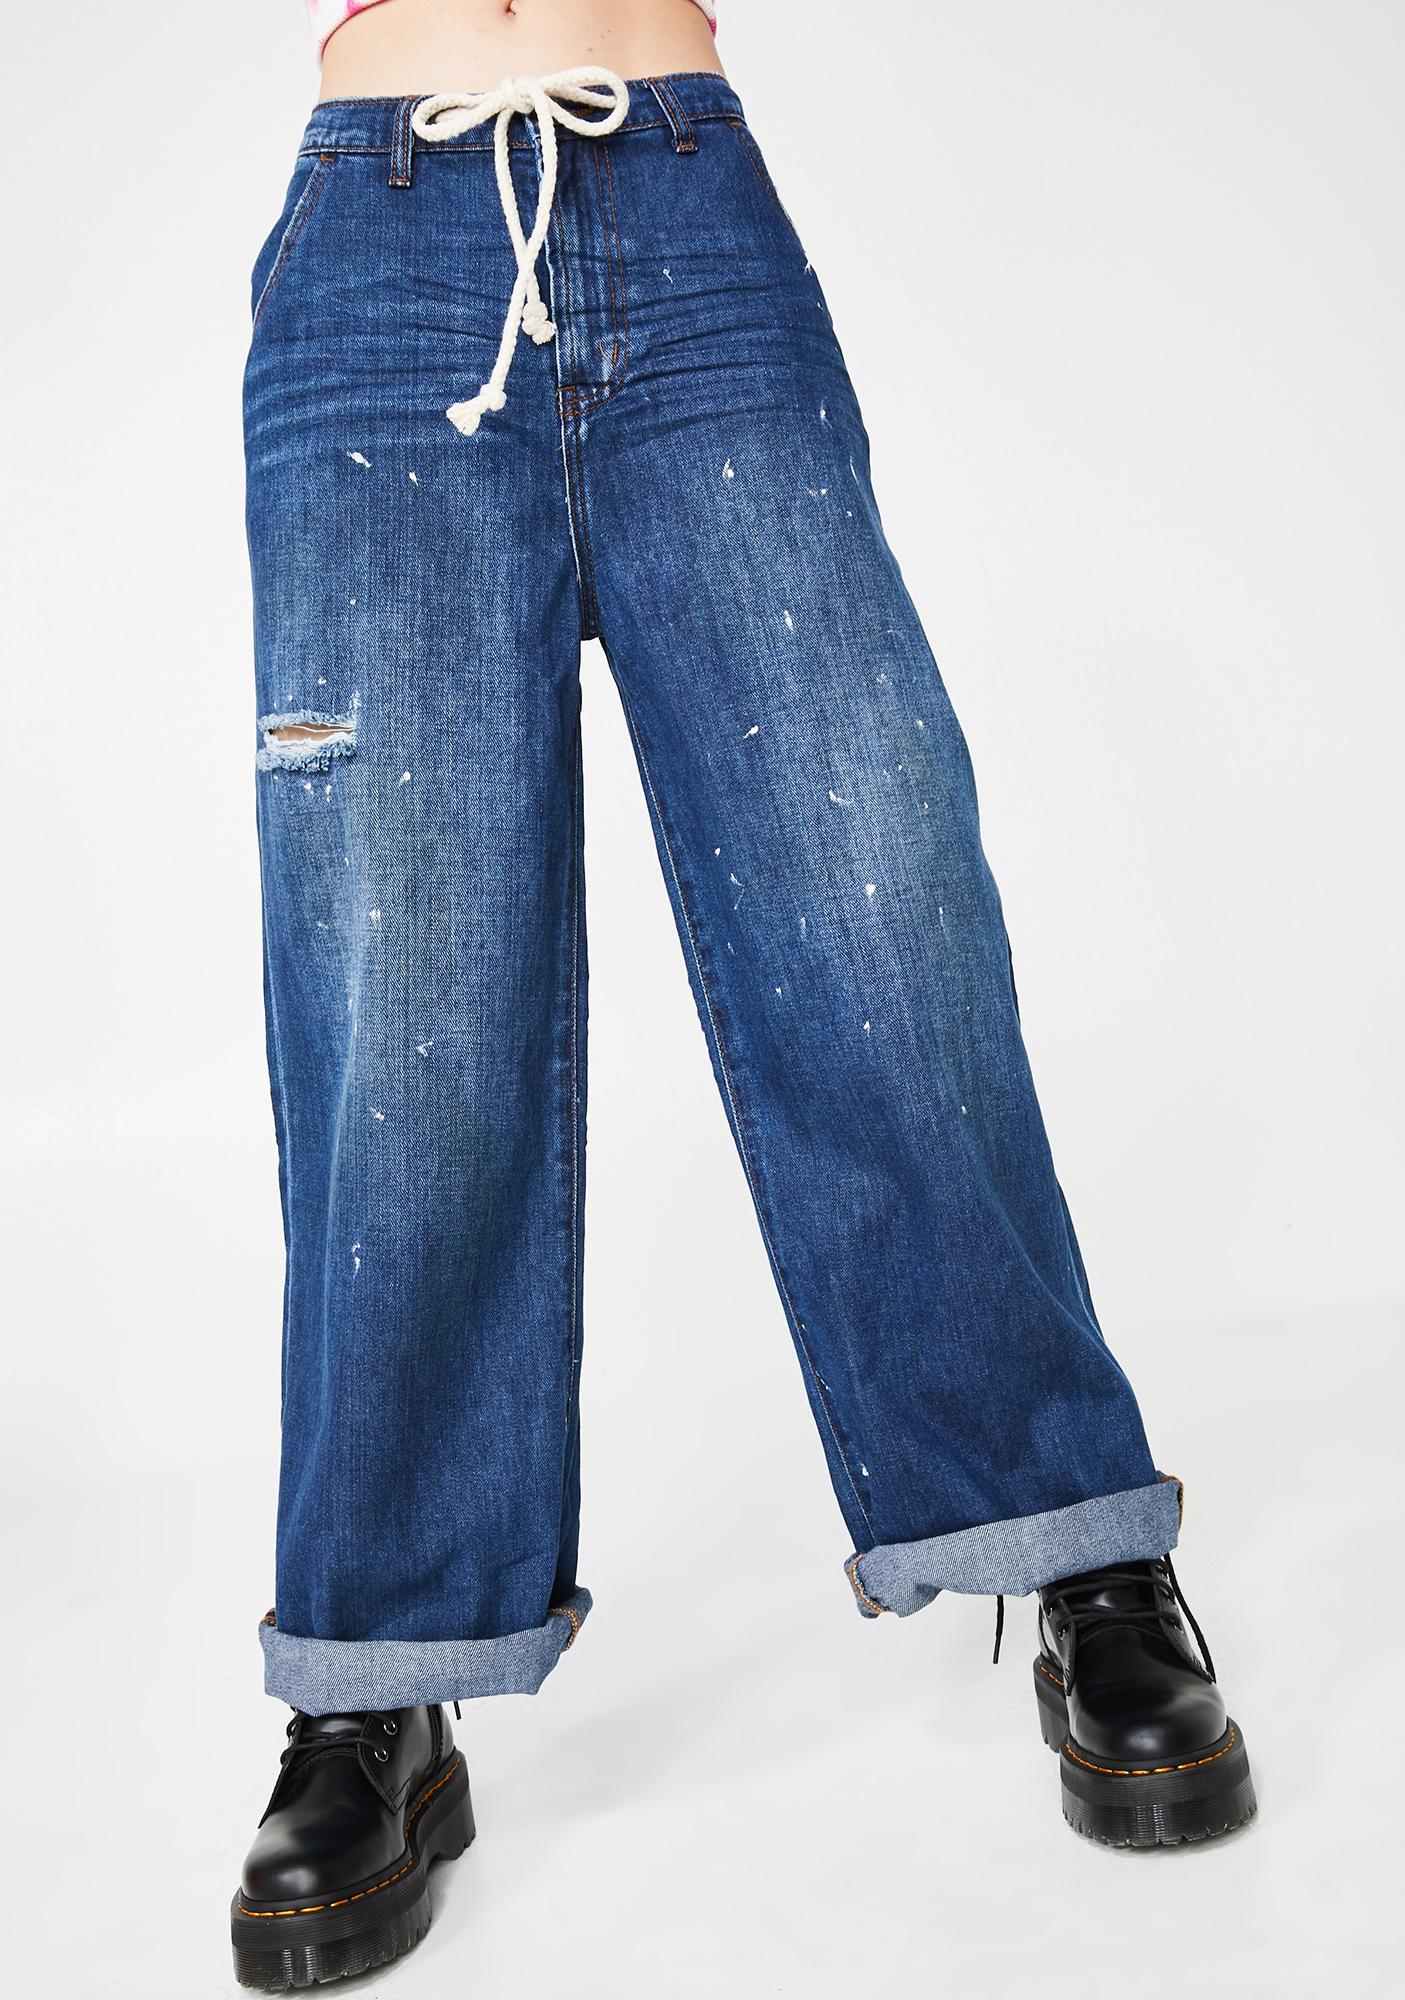 high waisted boy jeans